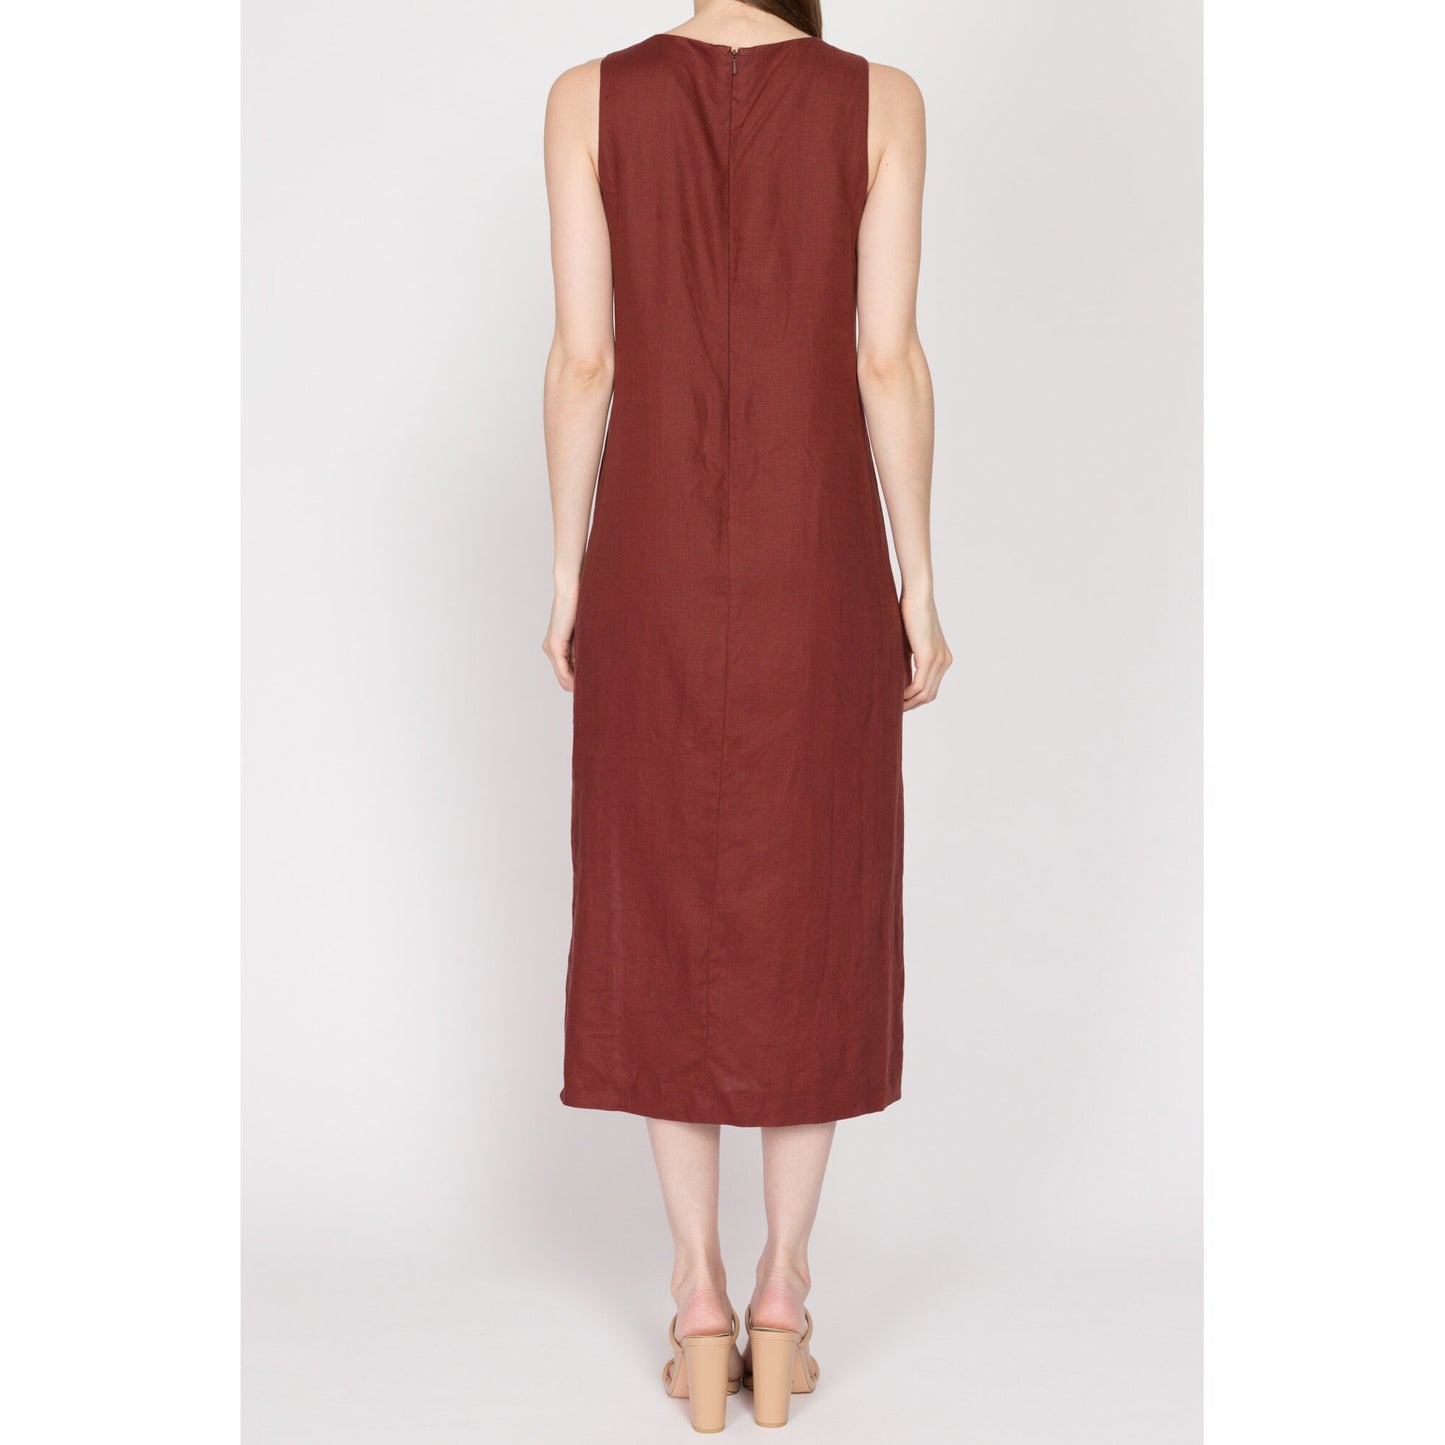 Small 90s Rust Red Linen Midi Shift Dress | Vintage Minimalist Side Slit Sleeveless Grunge Dress